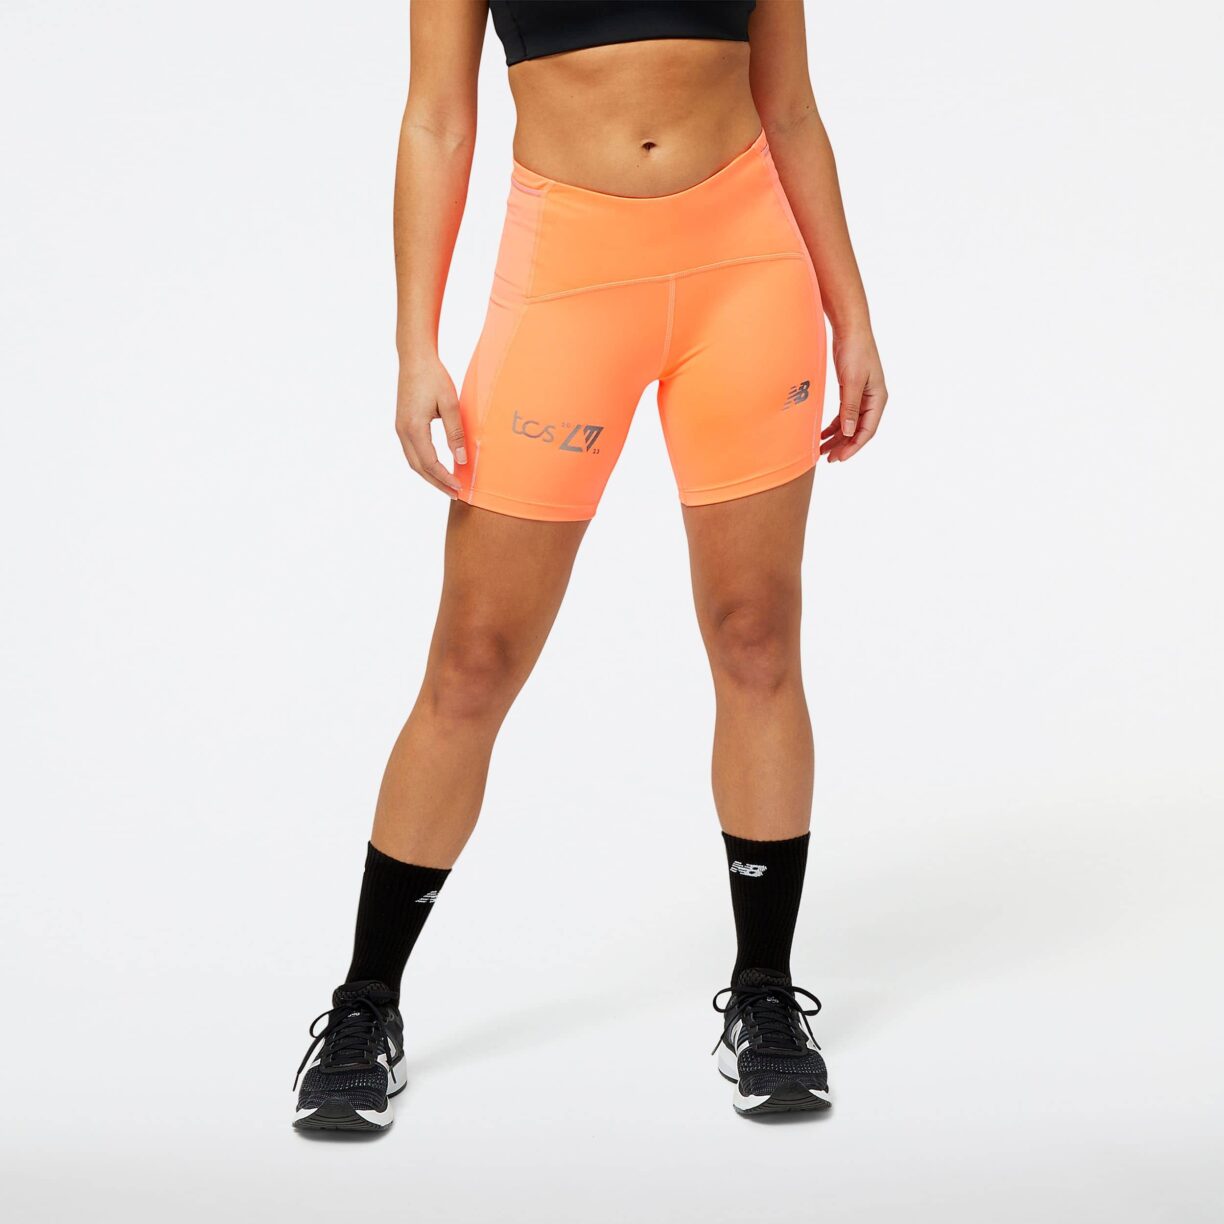 New balance women's london edition impact run fitted short orange